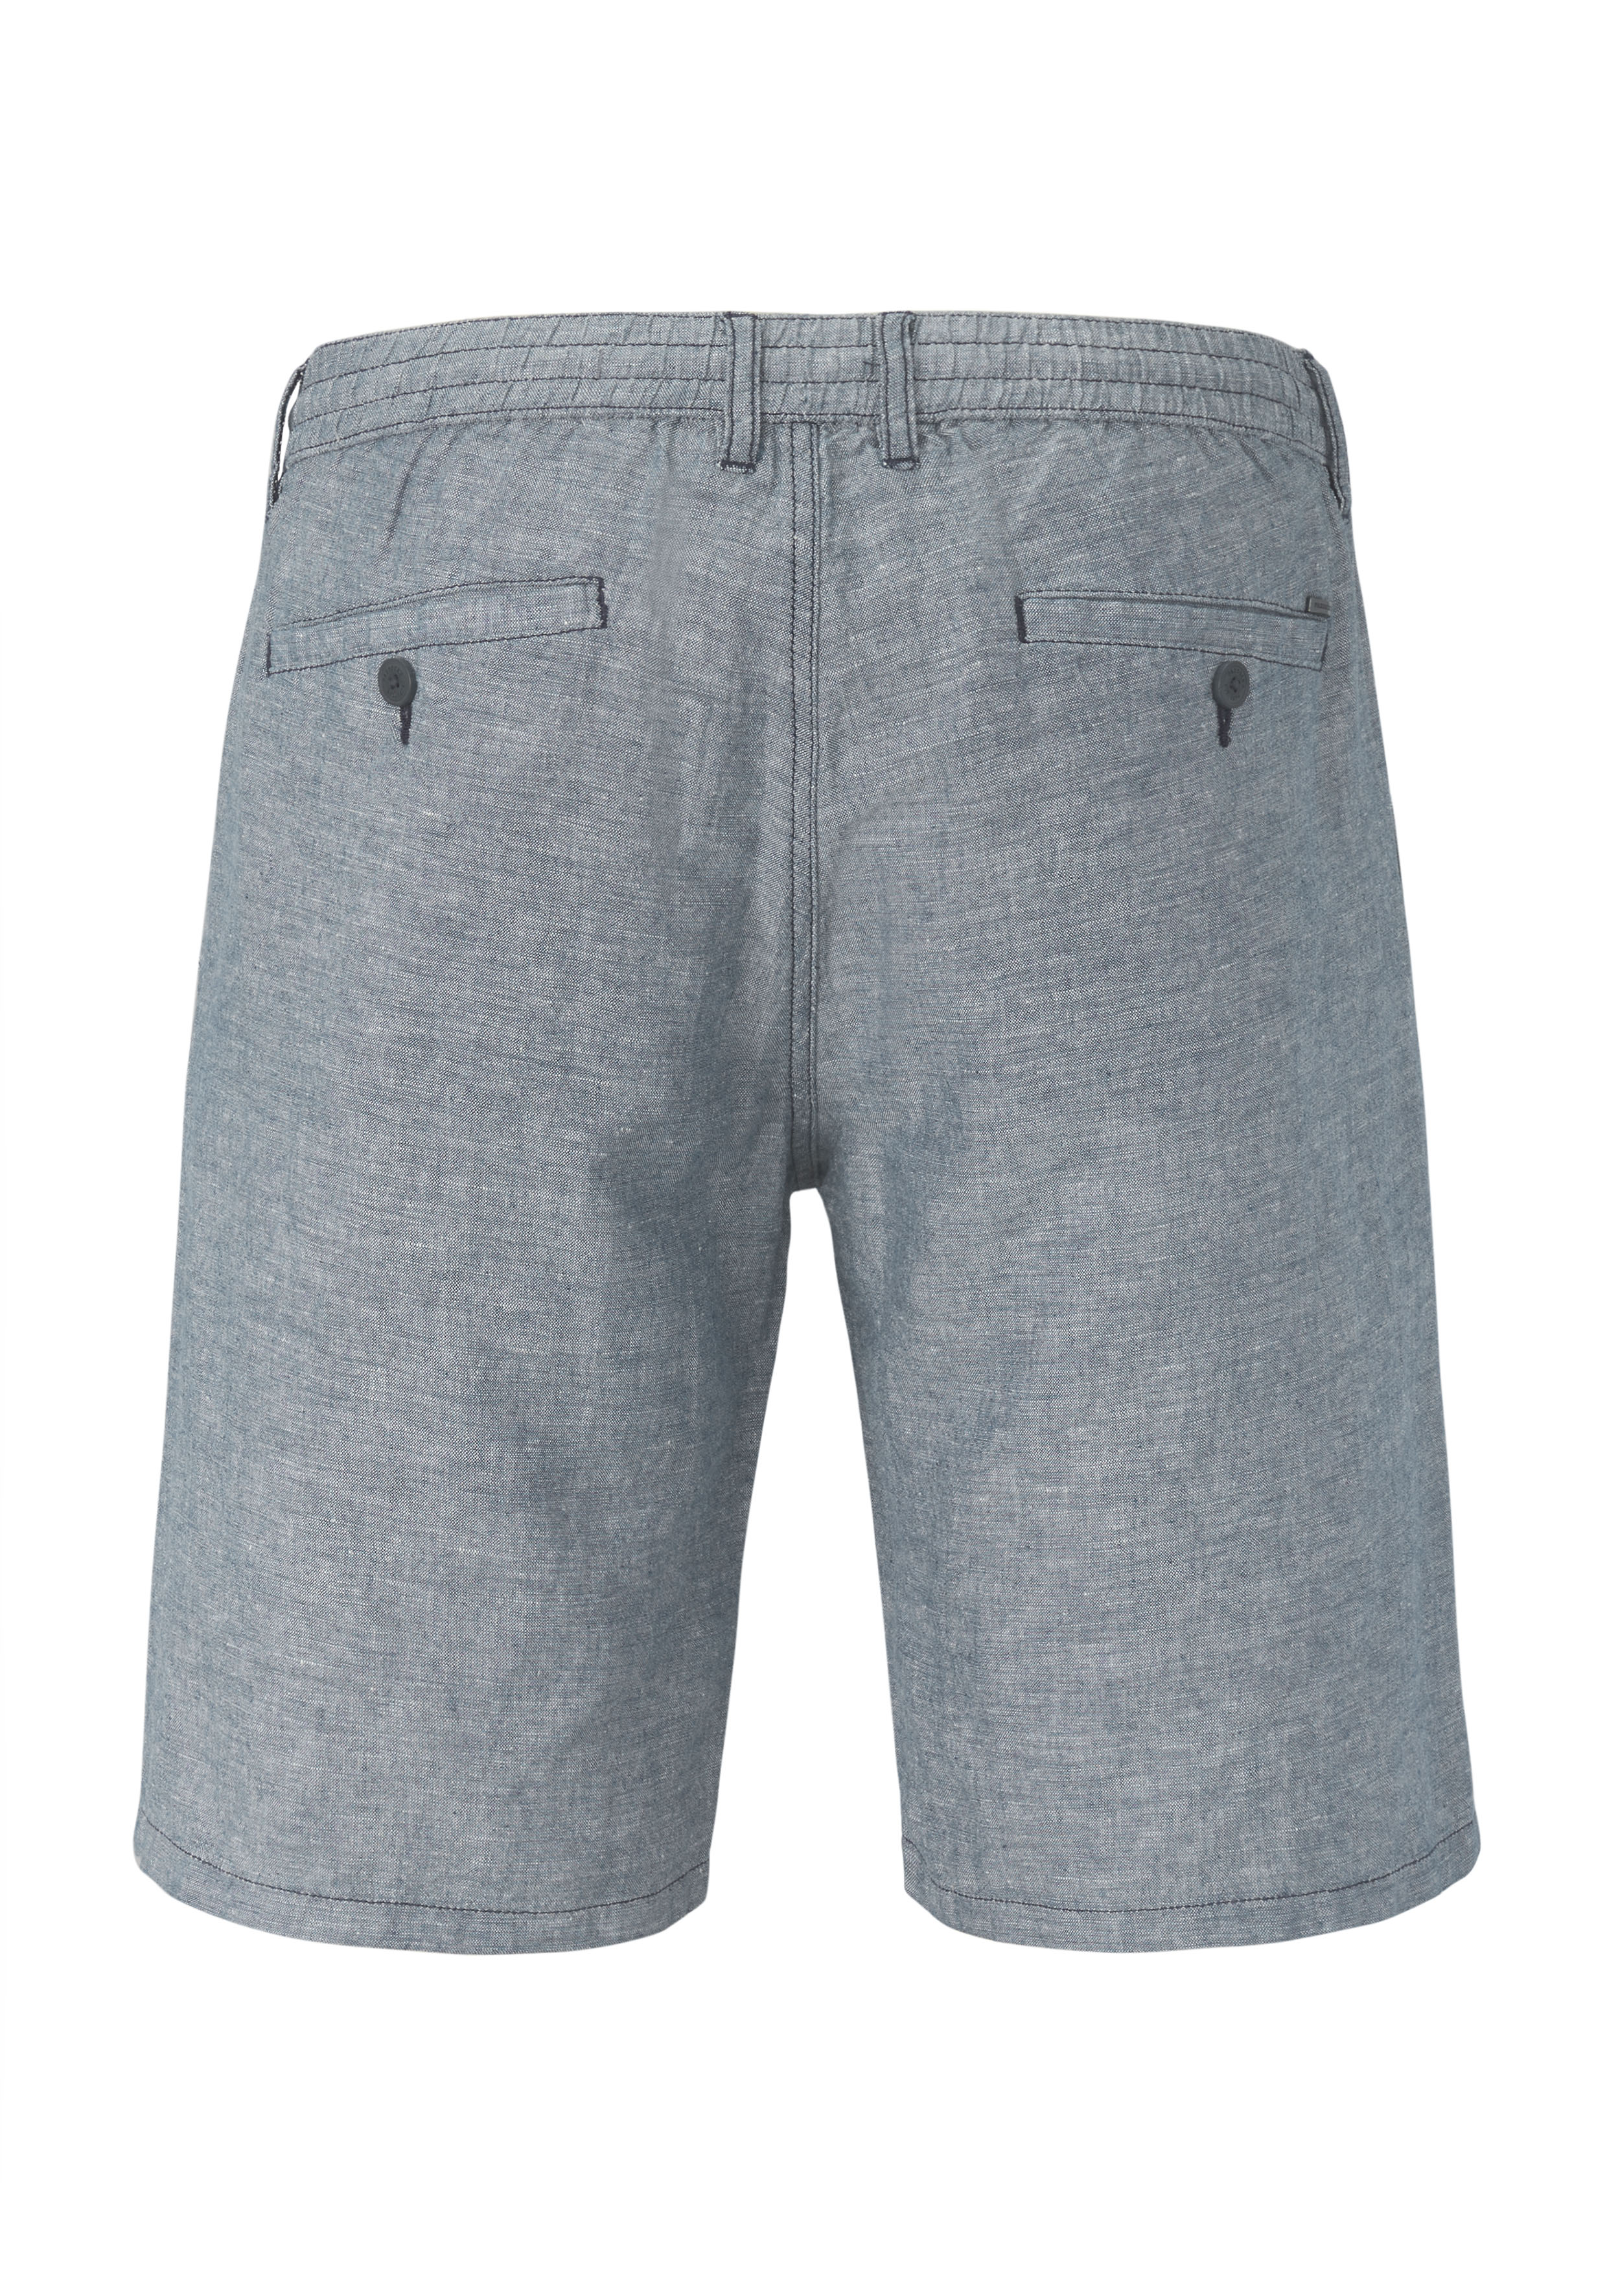 801627101000-0800_2_herren-bermudas-relaxed-fit-cotton-leinen-shorts-york-paddocks.jpg